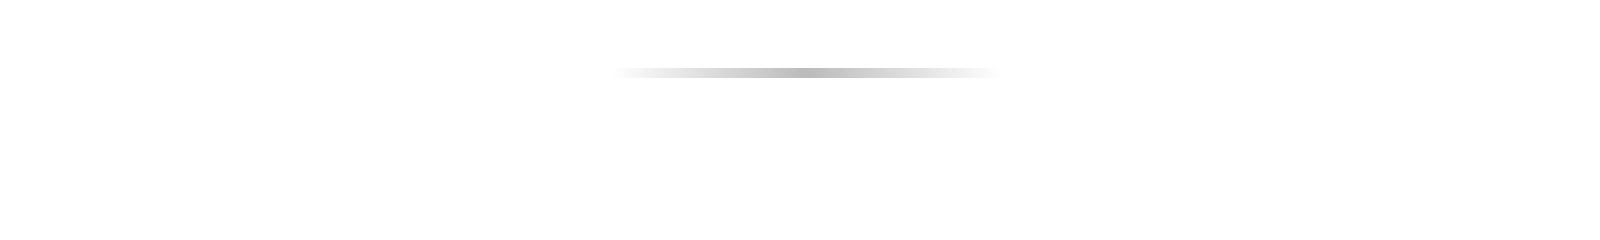 Essay